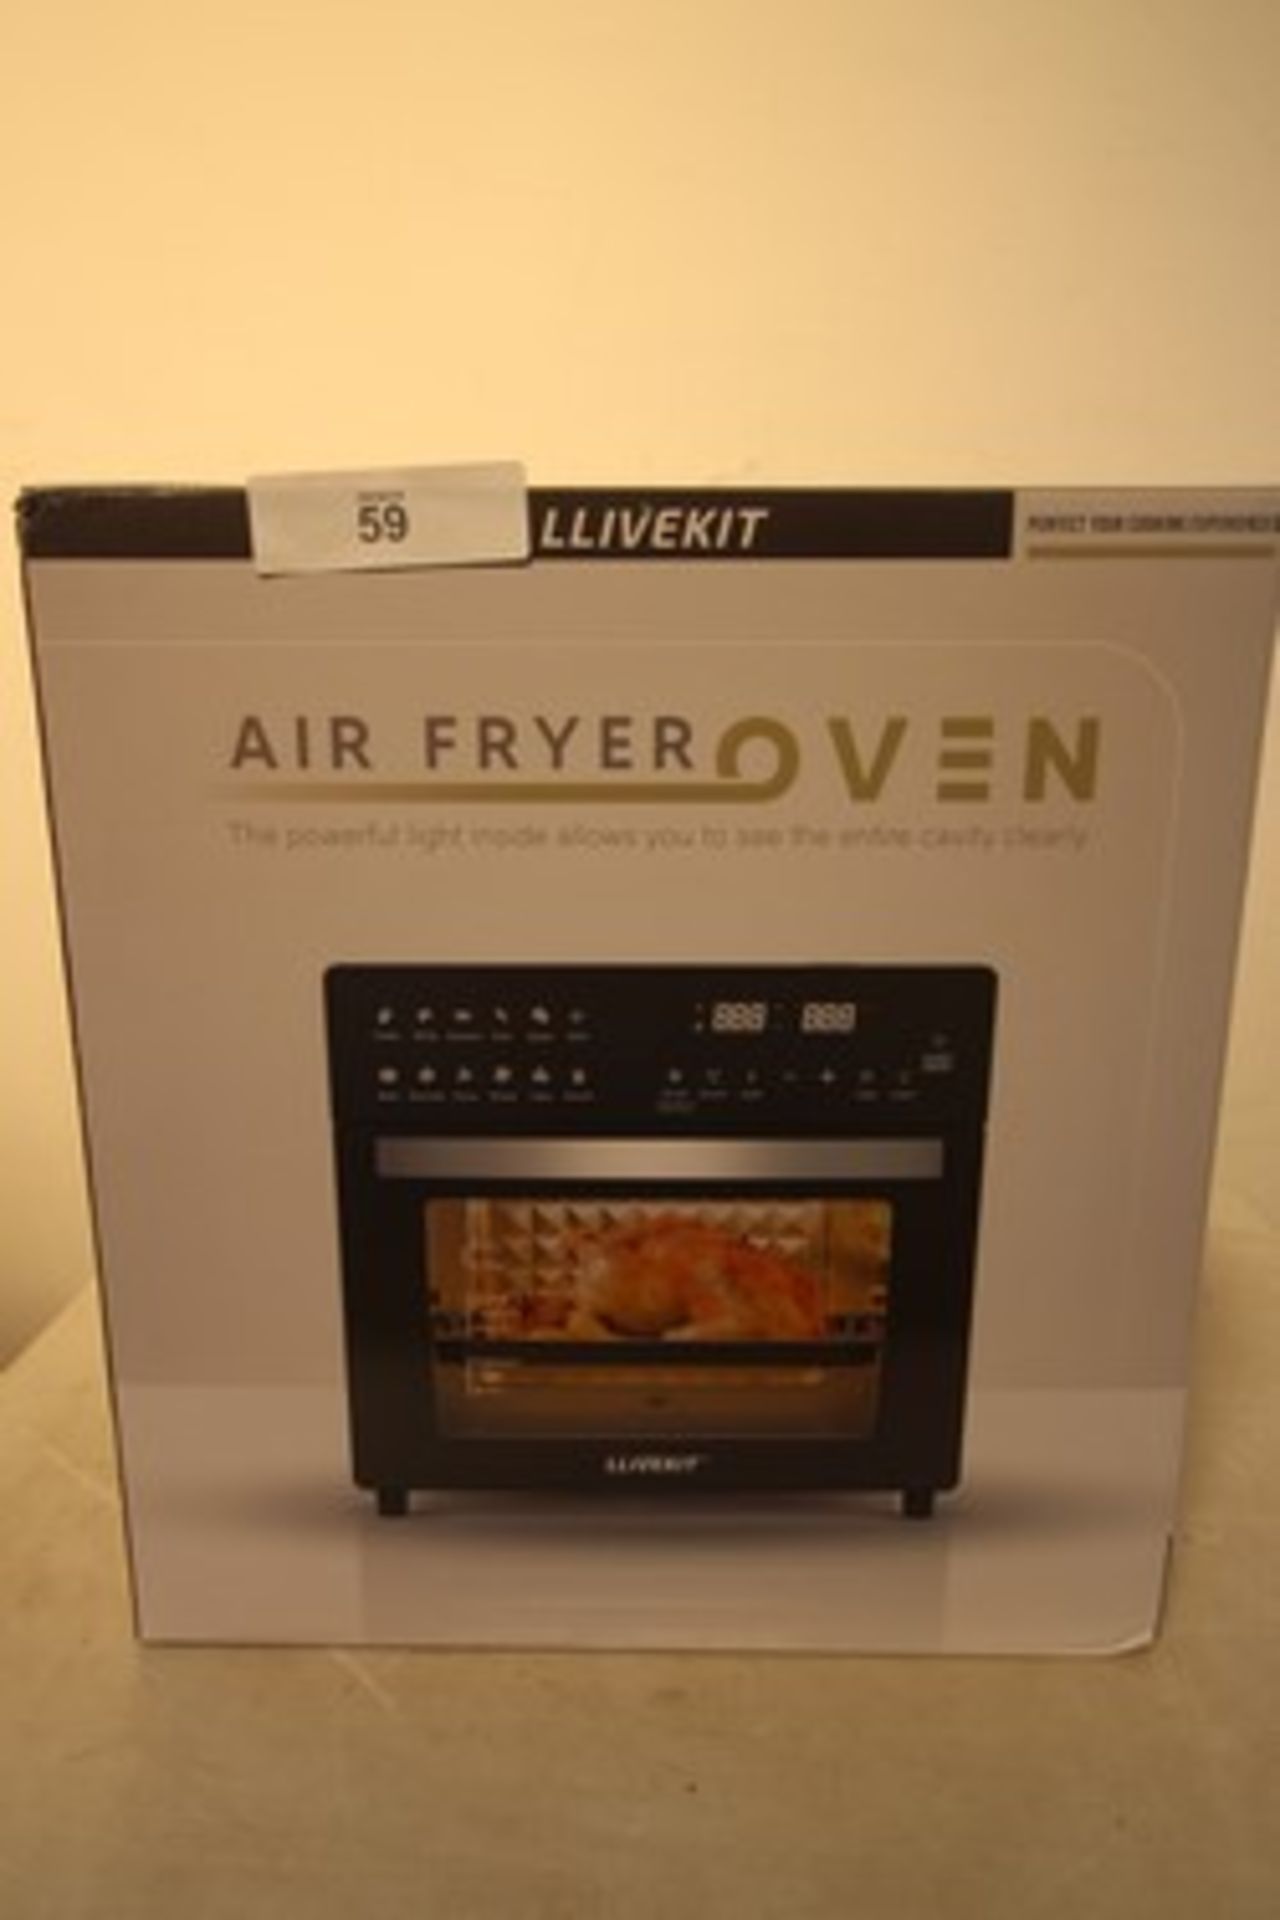 1 x Llivekit 26L air fryer oven, model No: AFS26E - sealed new in box (ES2) - Image 2 of 2